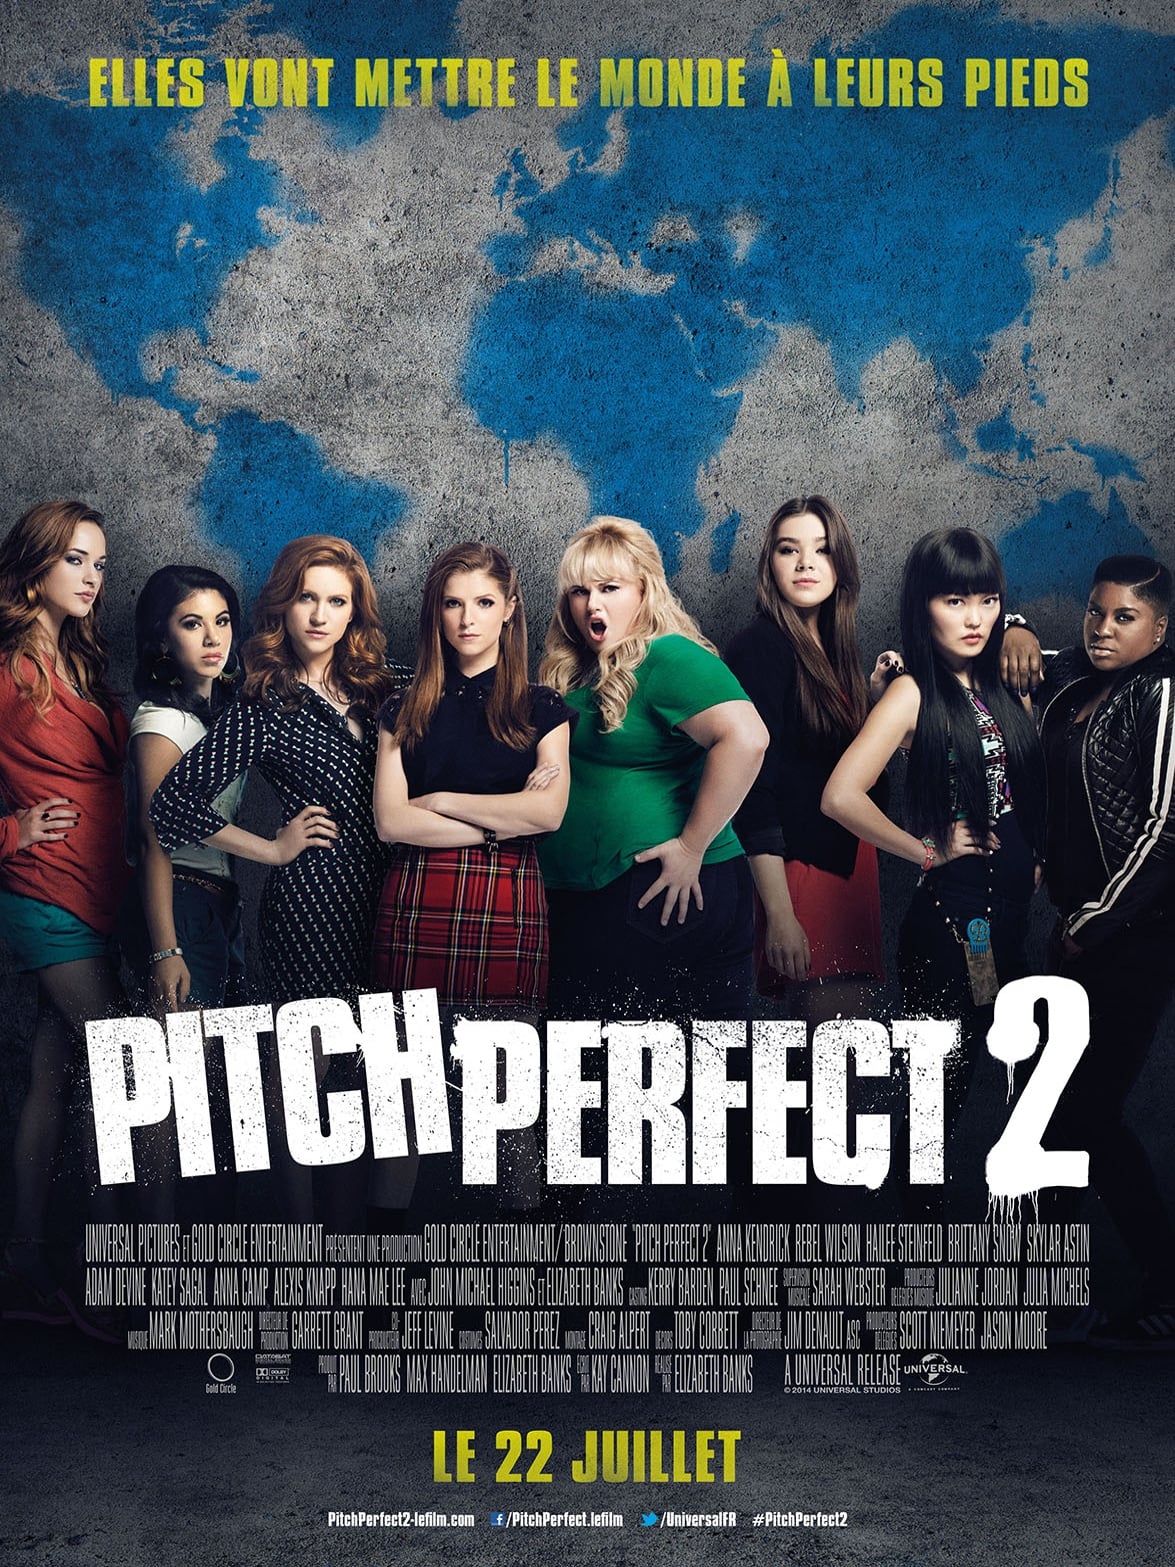 Affiche du film Pitch Perfect 2 poster